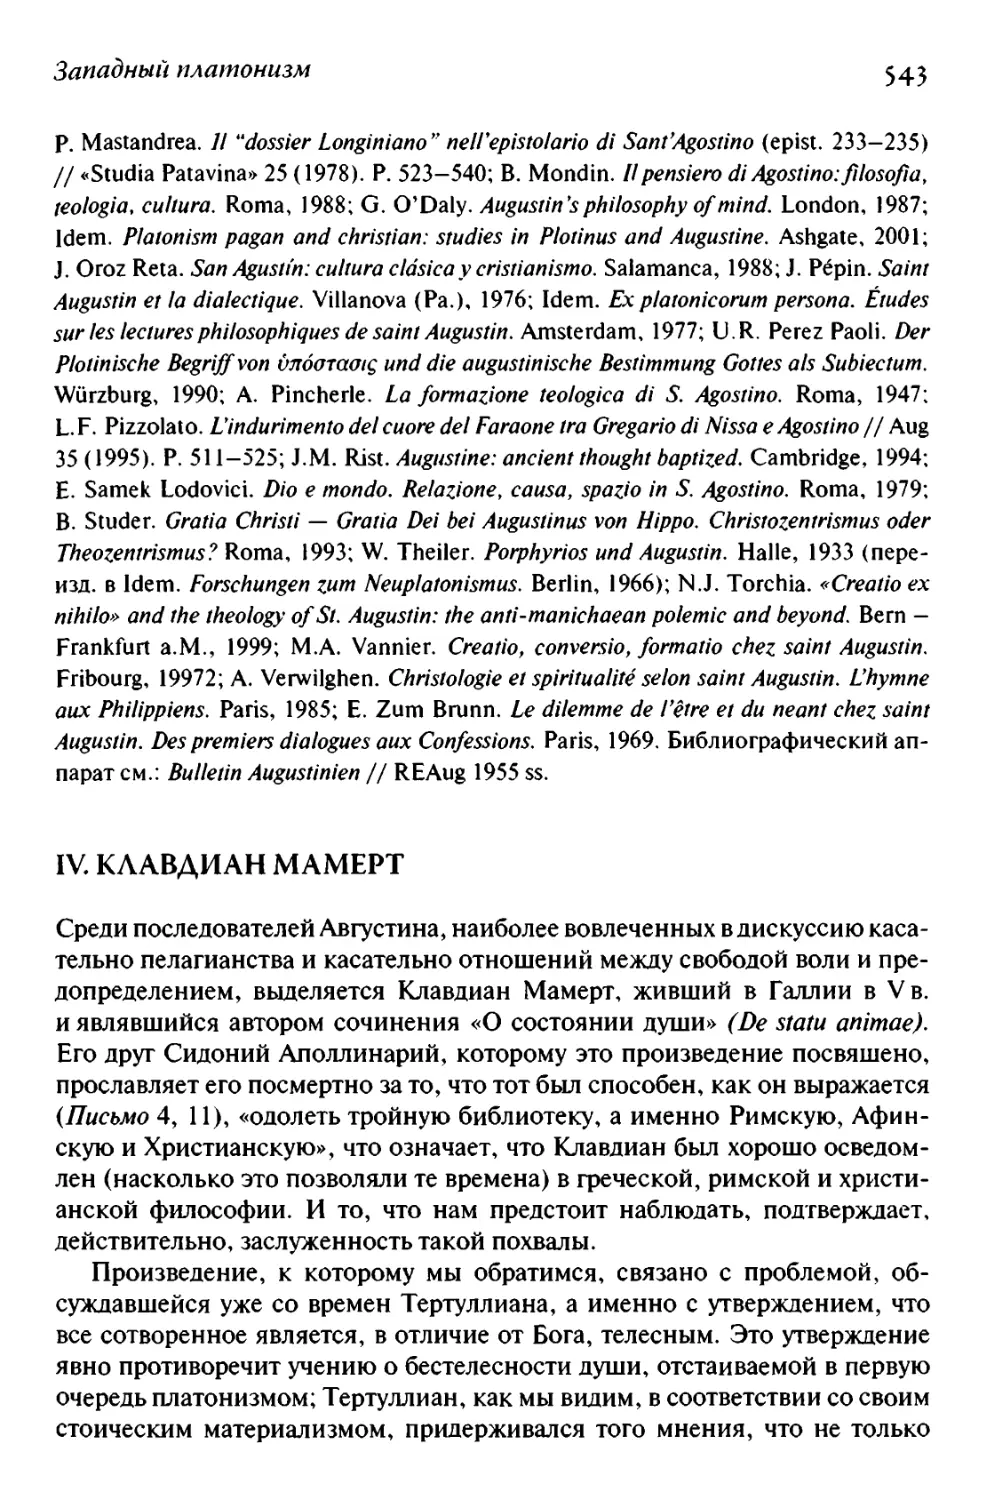 IV. КЛАВДИАН МАМЕРТ